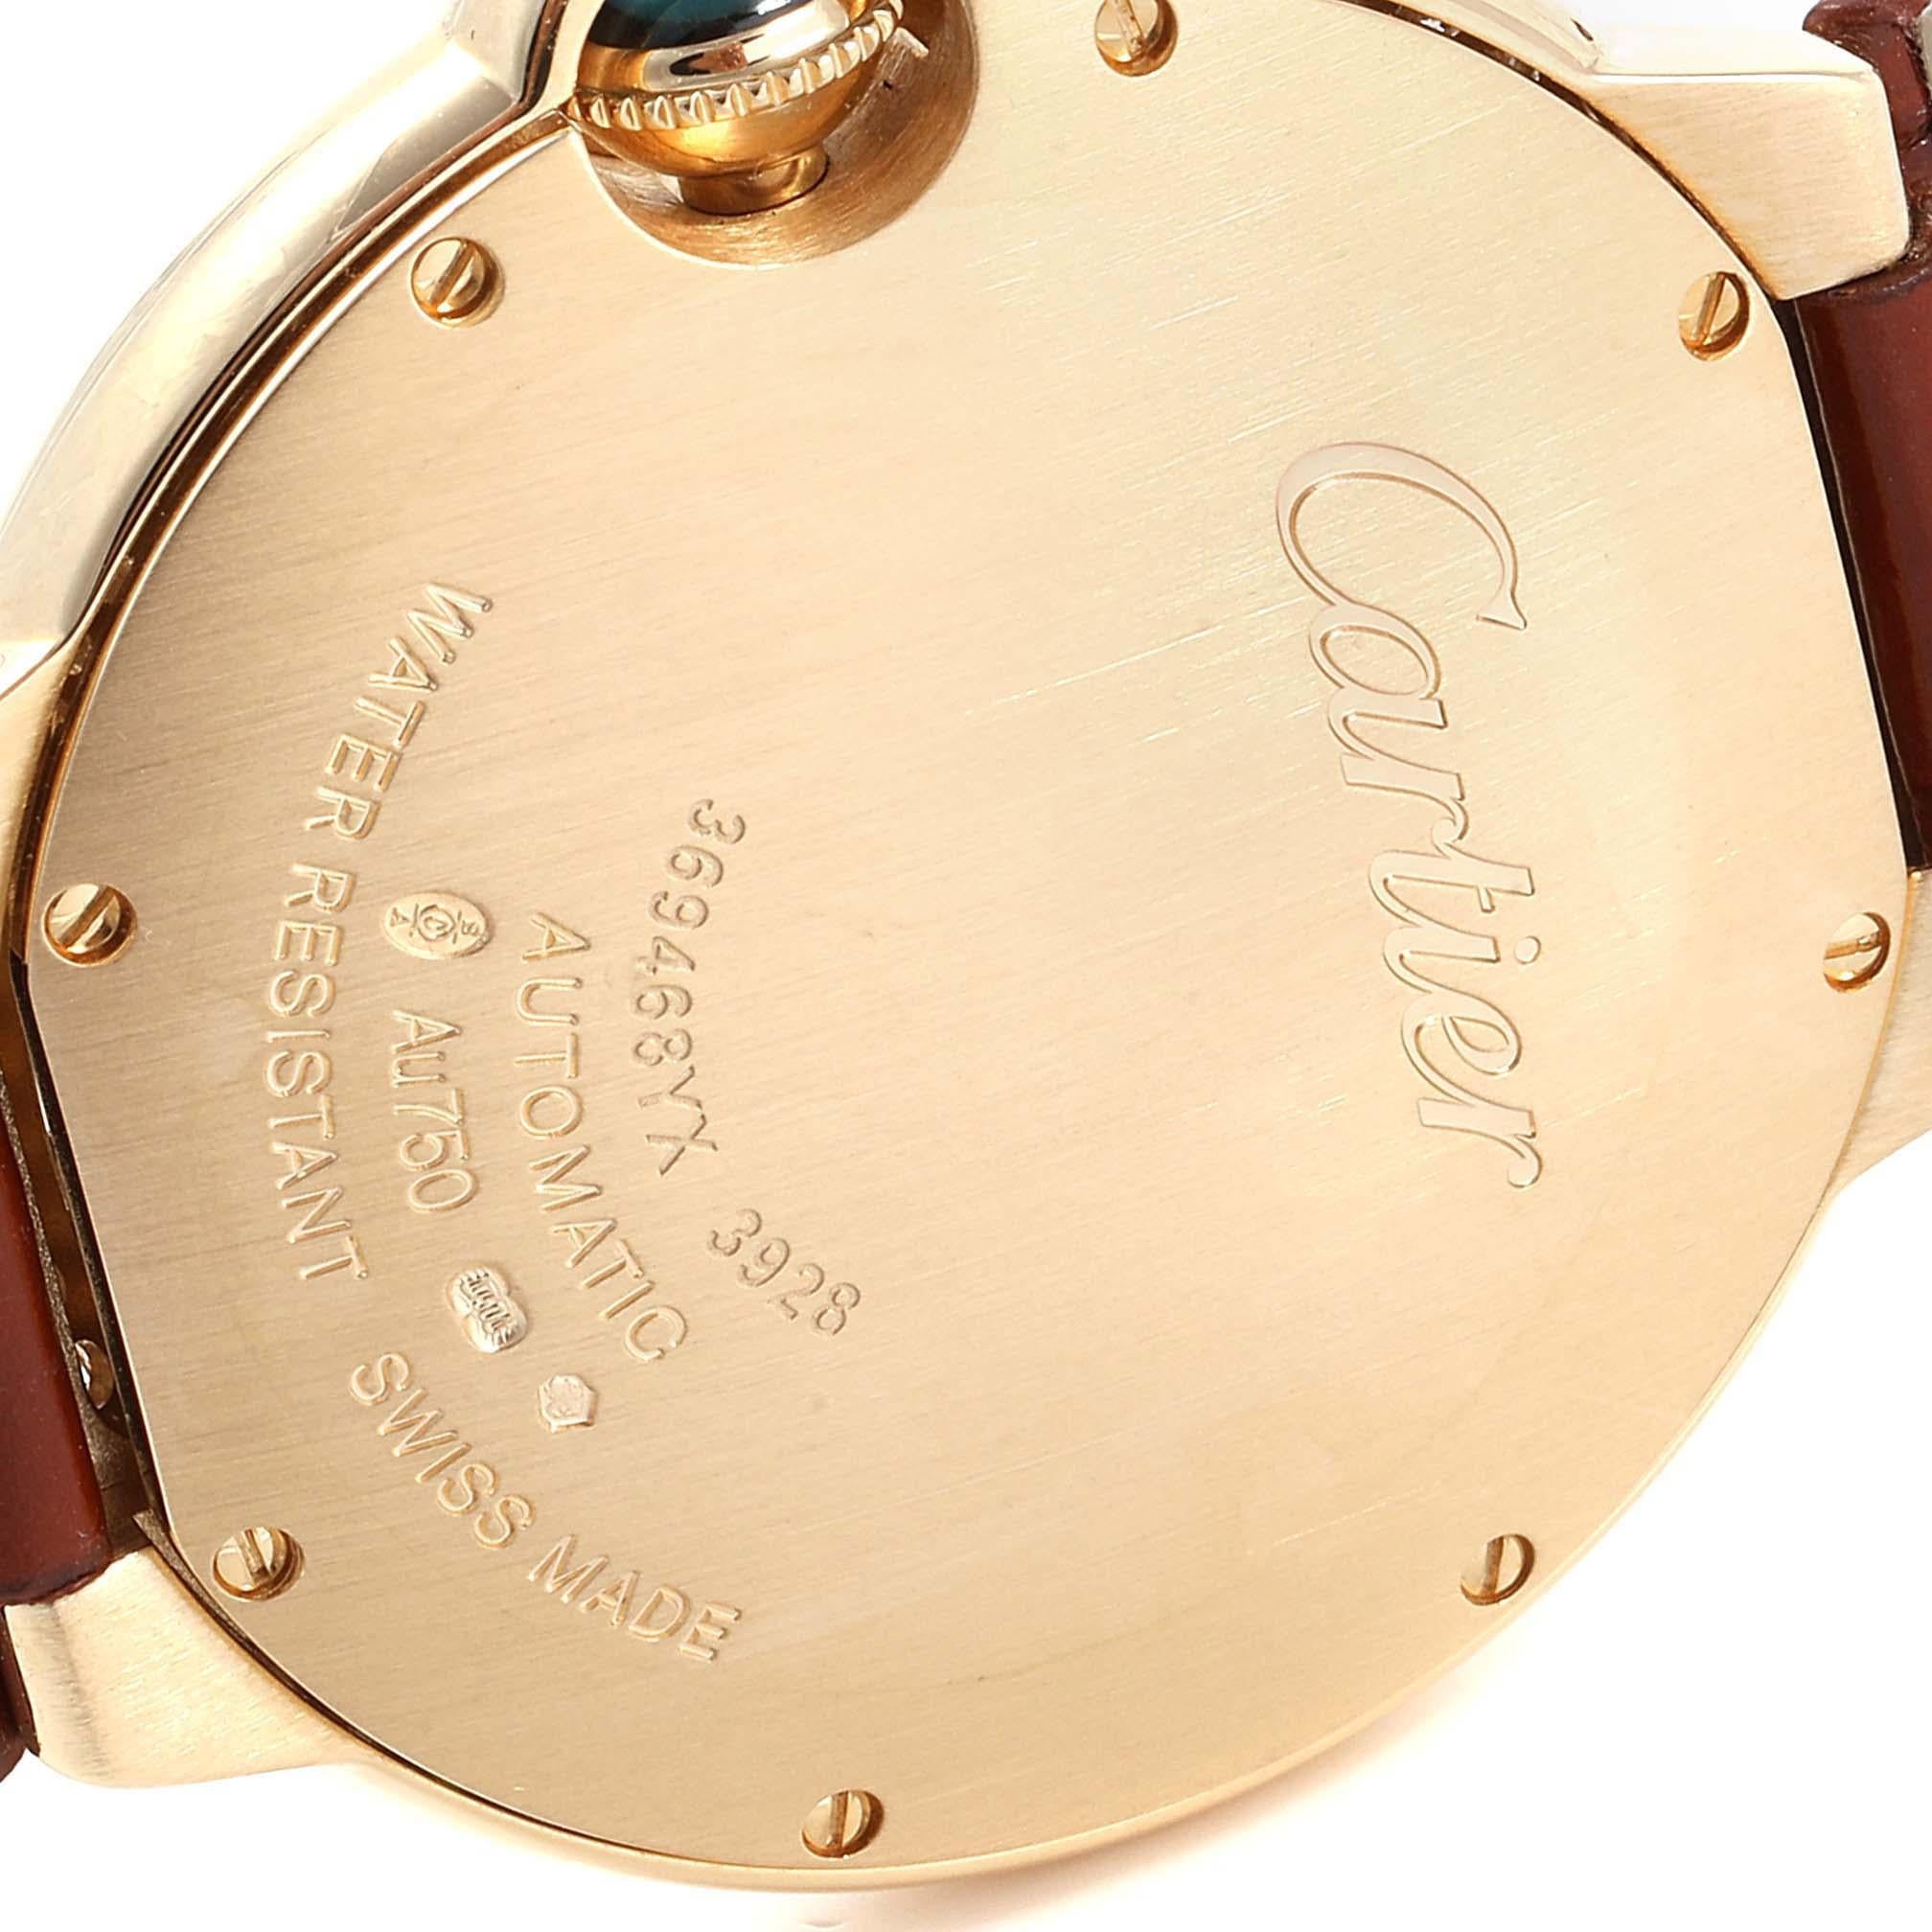 Cartier Ballon Bleu Midsize Yellow Gold Diamond Watch WE900451 Unworn For Sale 1